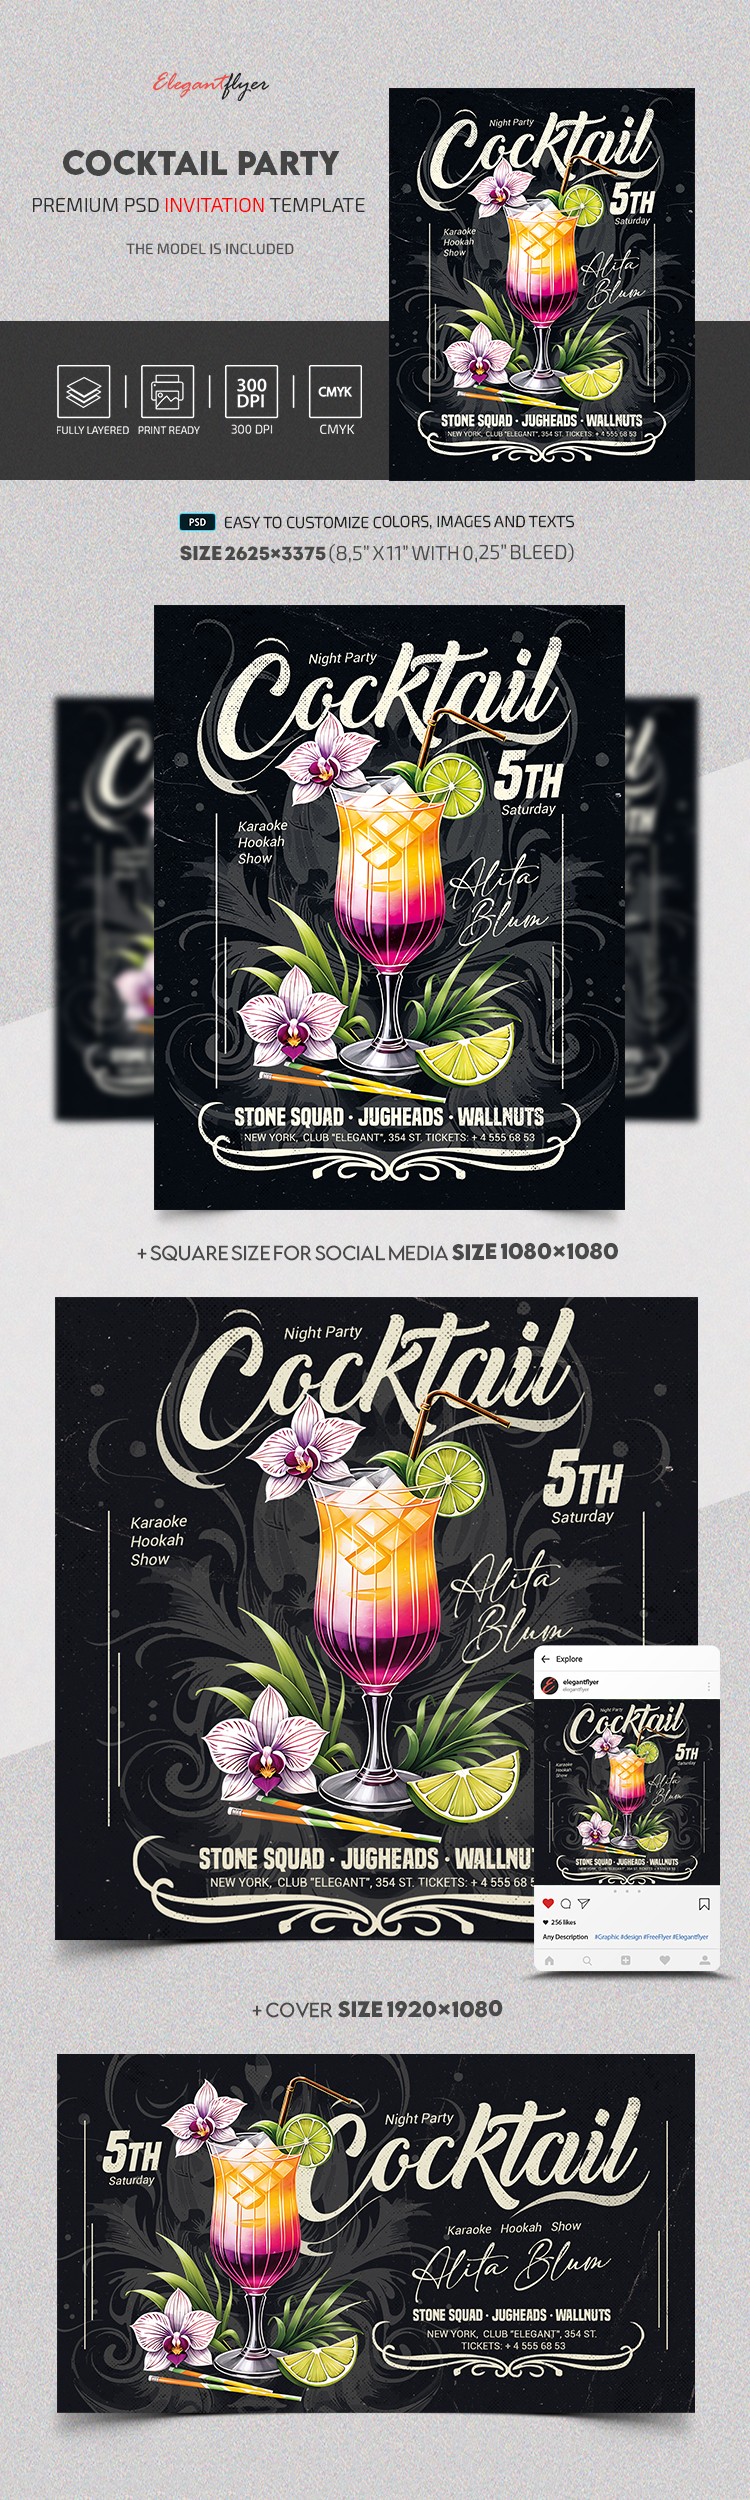 Cocktail Party by ElegantFlyer